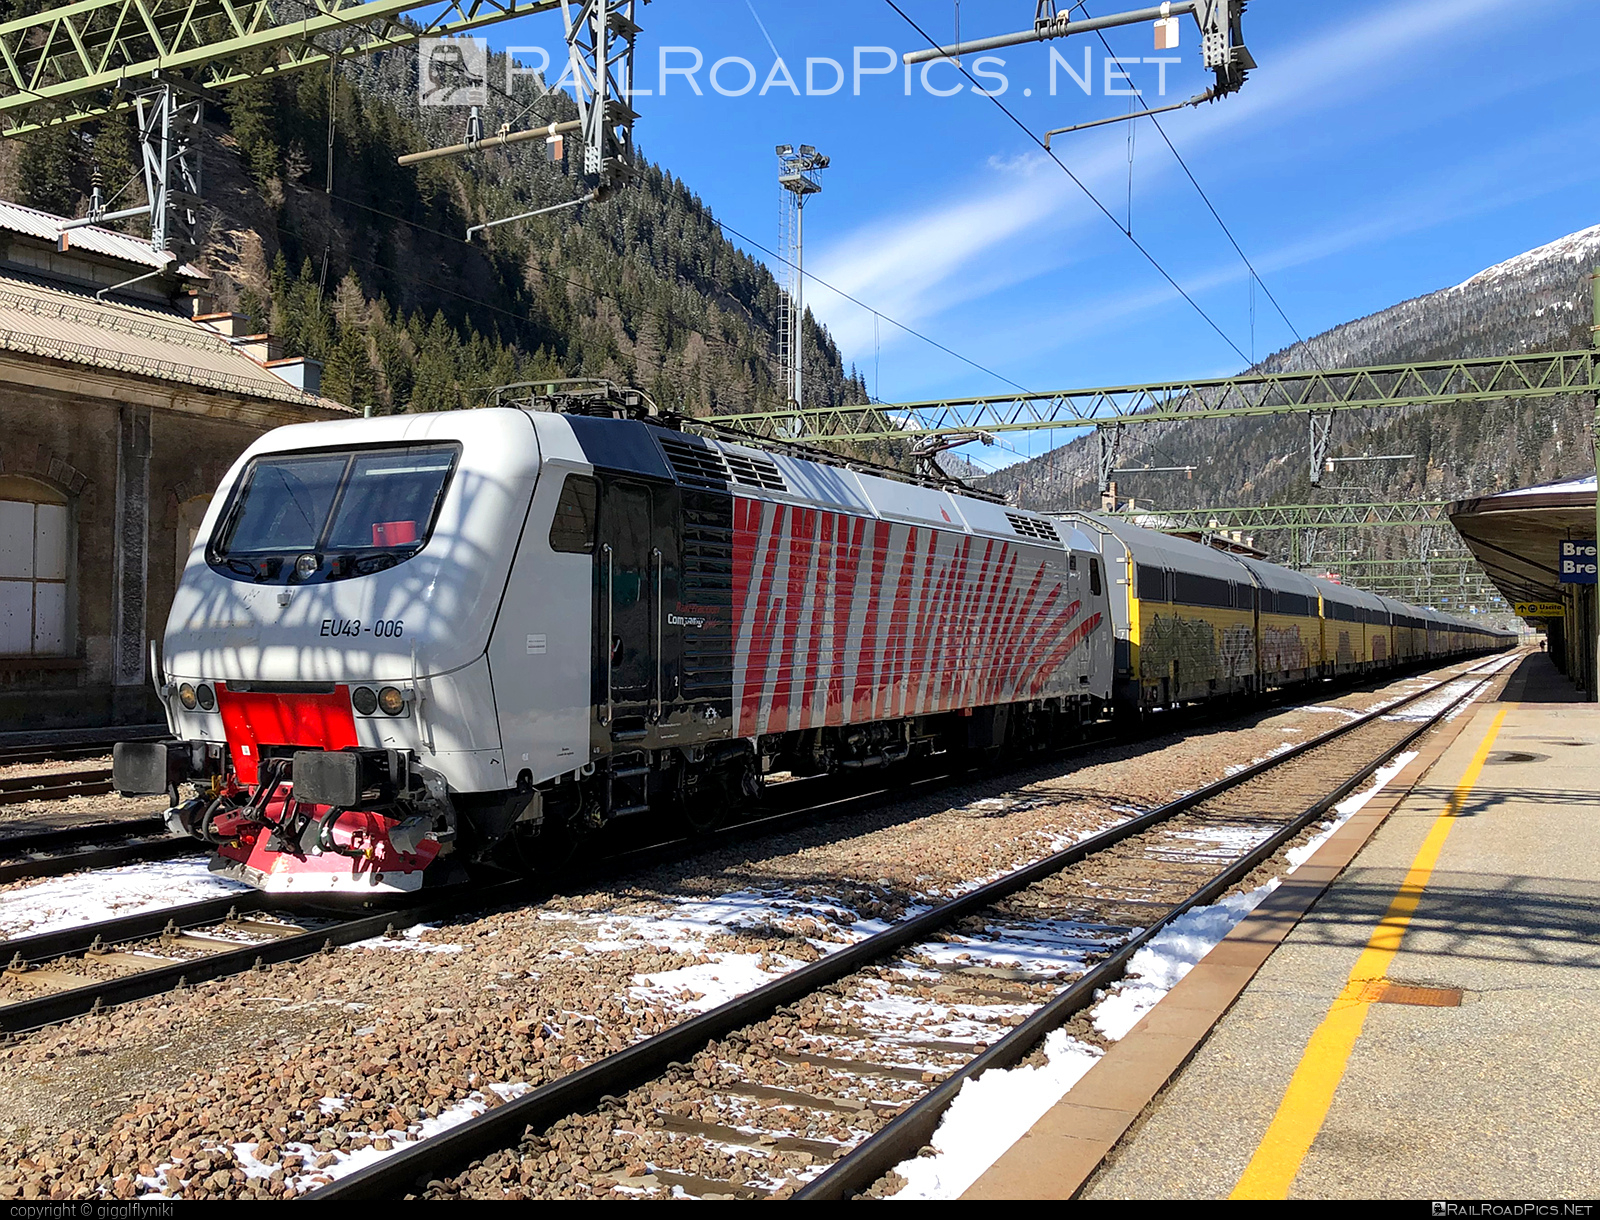 FS Class E.412 - EU43-006 operated by Lokomotion Gesellschaft für Schienentraktion mbH #LokomotionGesellschaftFurSchienentraktion #RailTractionCompany #e412 #fsClassE412 #lokomotion #rtc